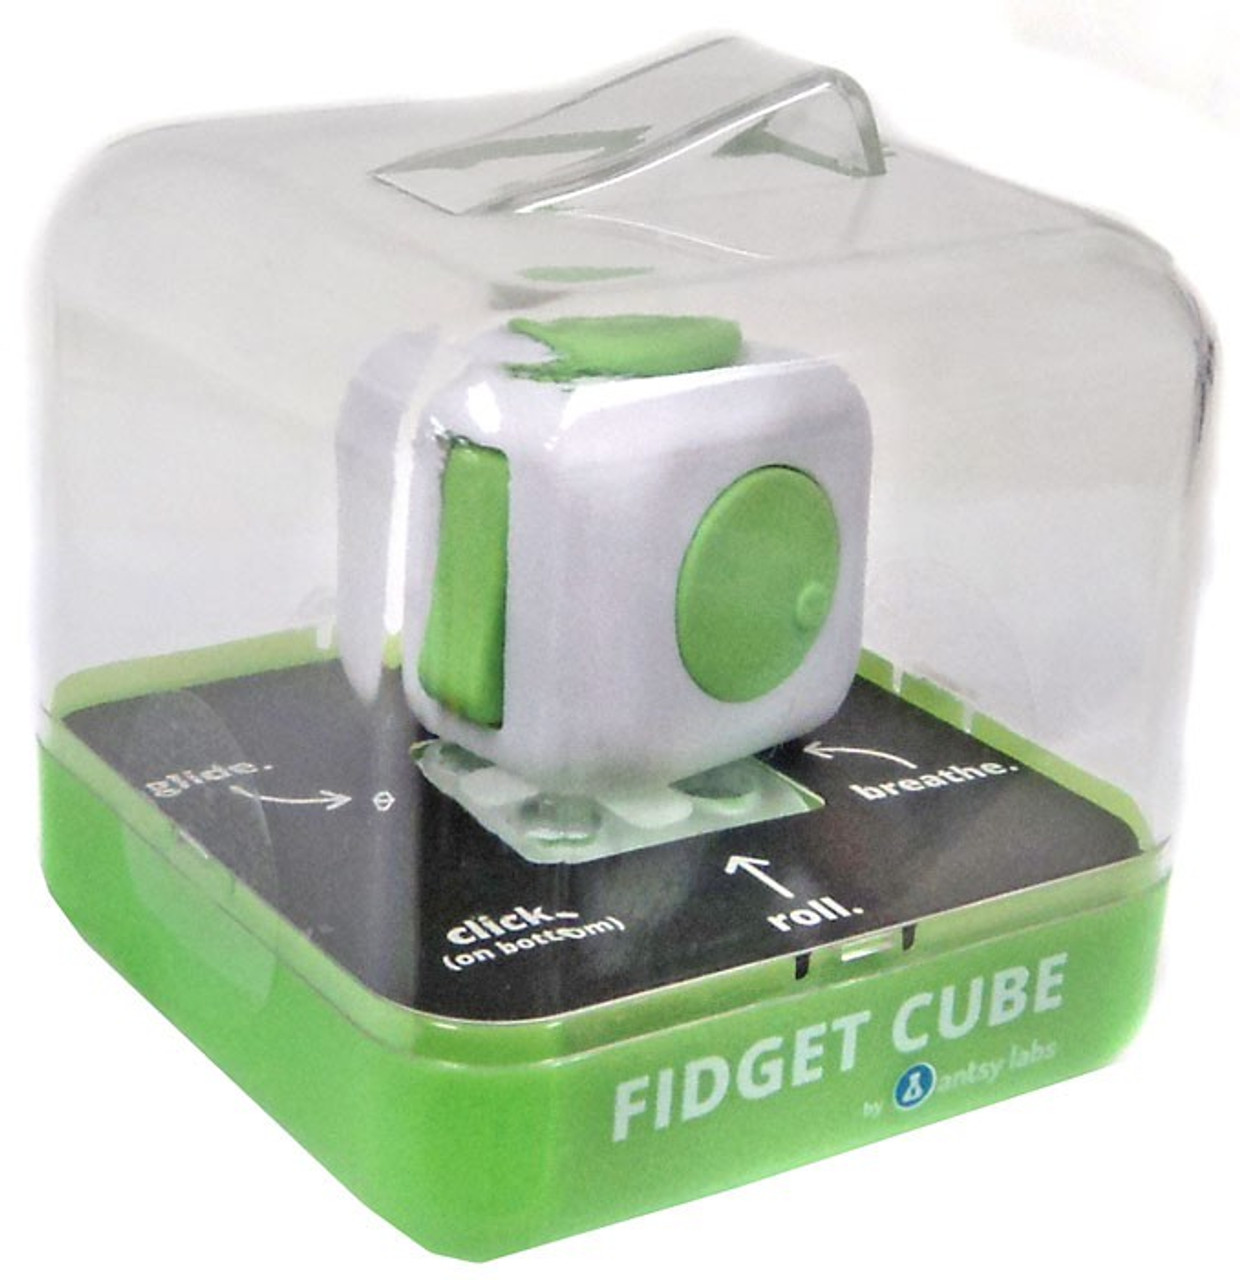 Fidget Cube Authentic Green White Fidget Cube Antsy Labs Toywiz - roblox cube eat cube